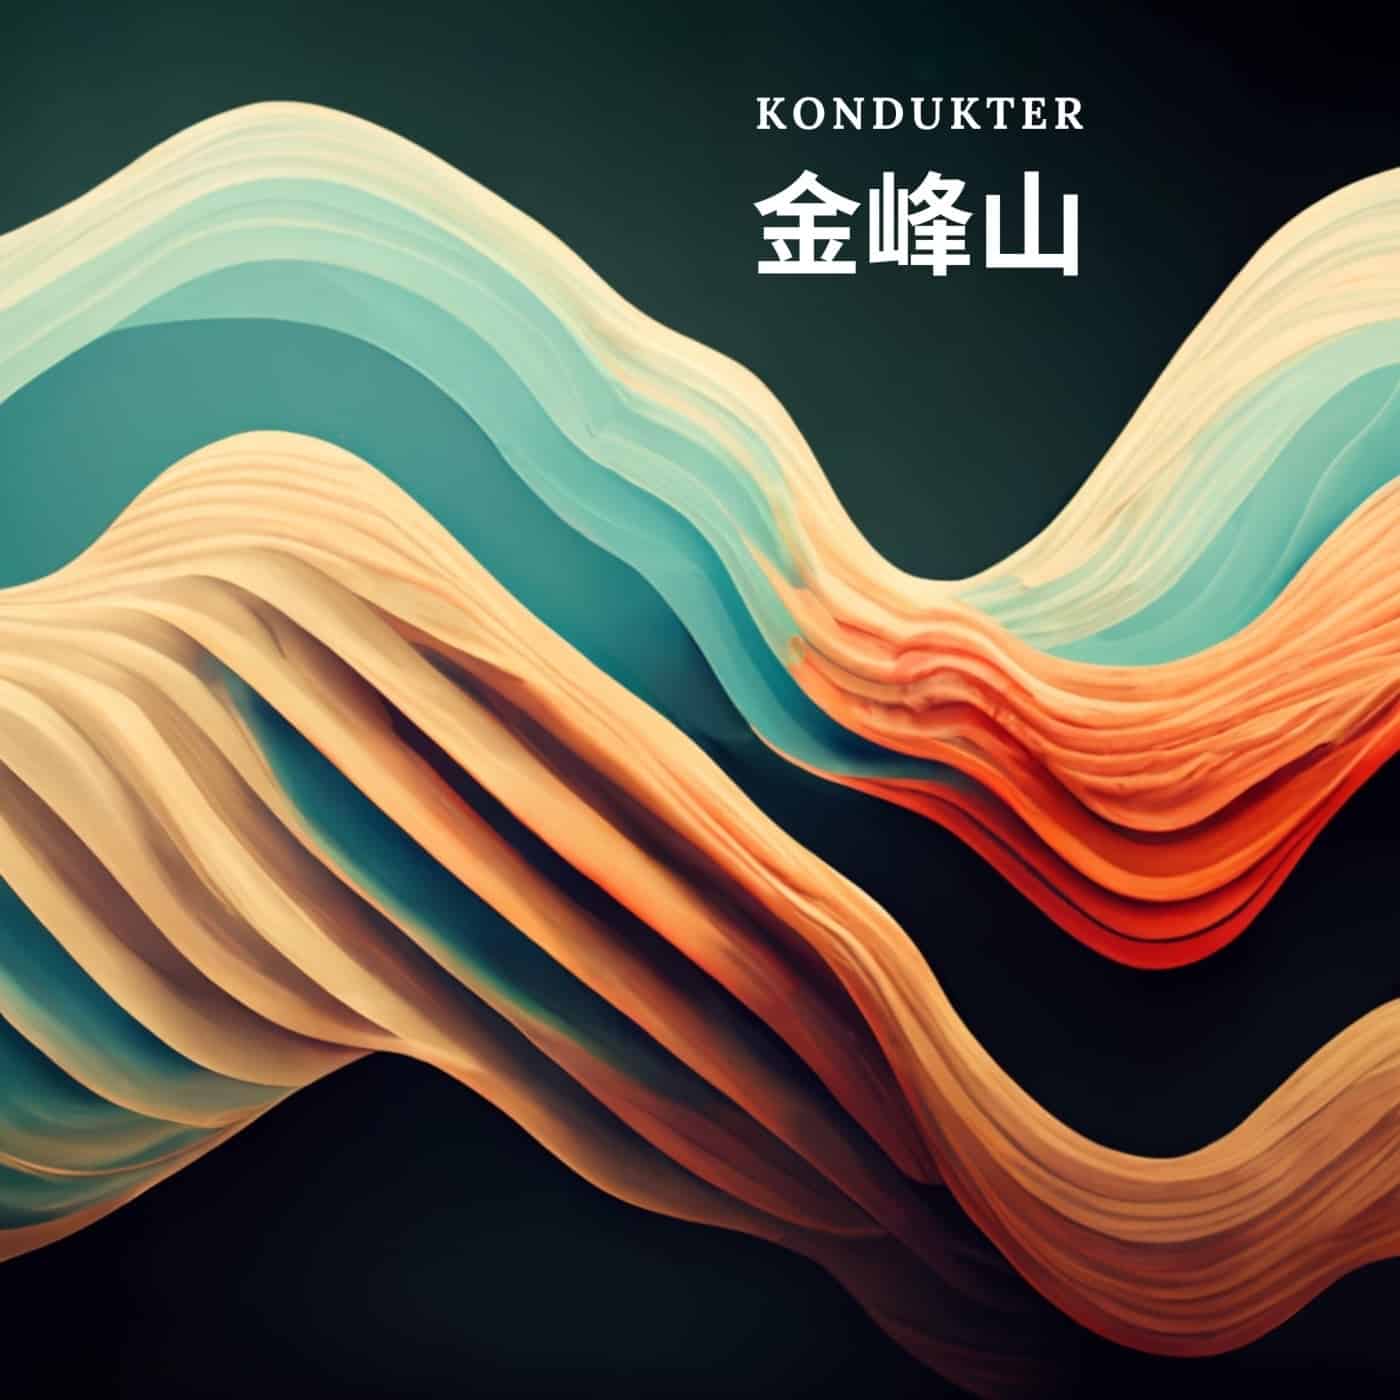 Download Kondukter - 金峰山 on Electrobuzz